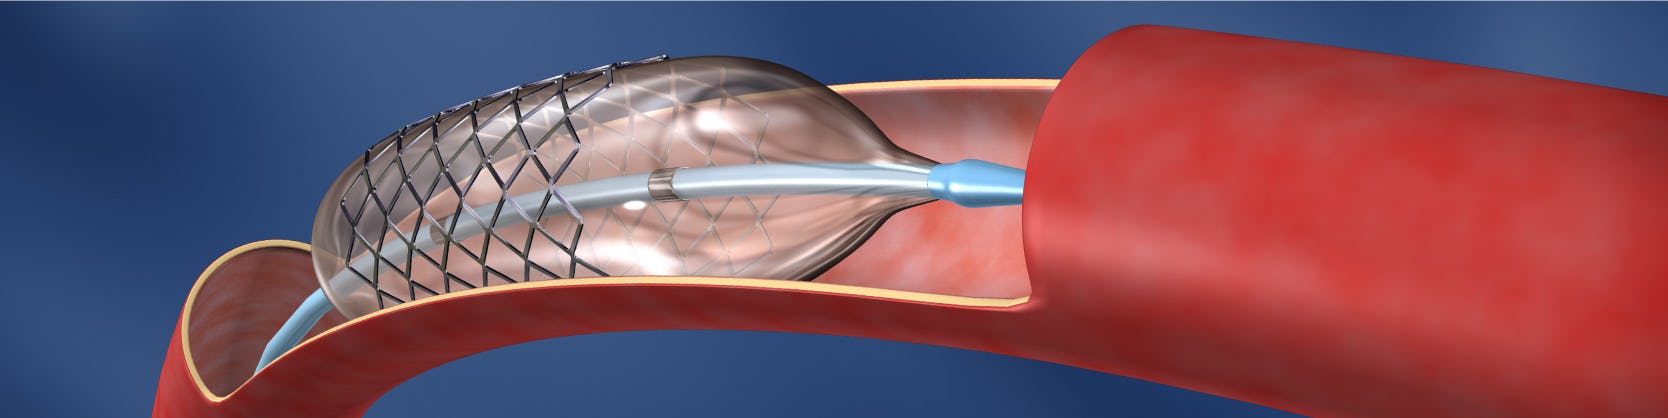 Angioplastie artere subclavii / Tratament ingustare vase de sange gat 